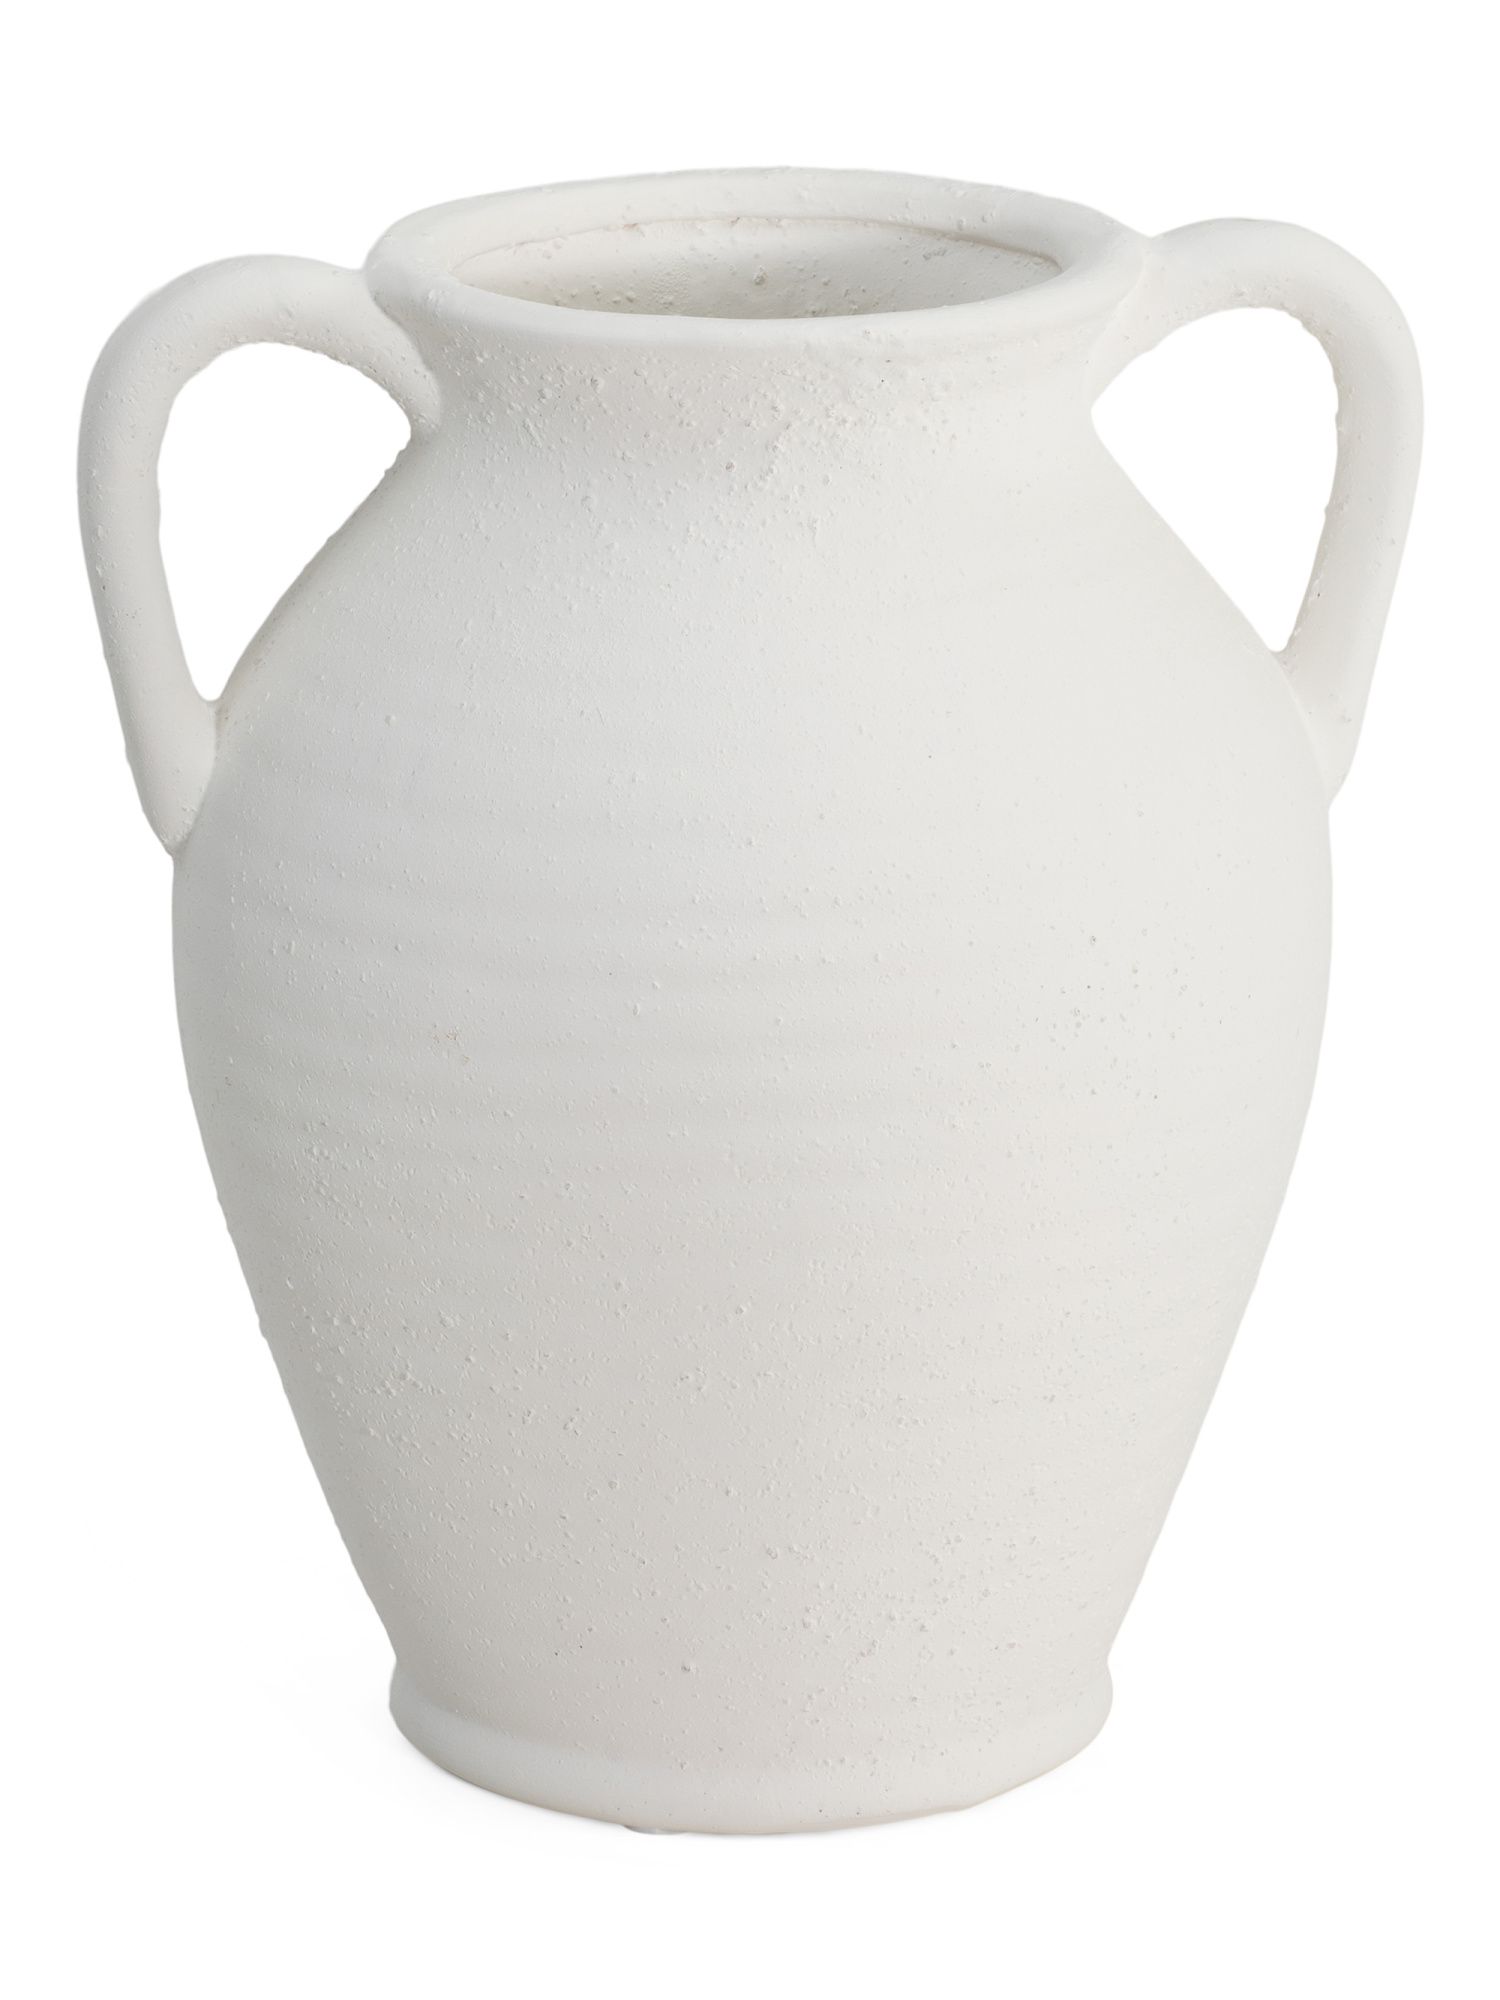 12in Textured Ceramic Vase With Handles | TJ Maxx